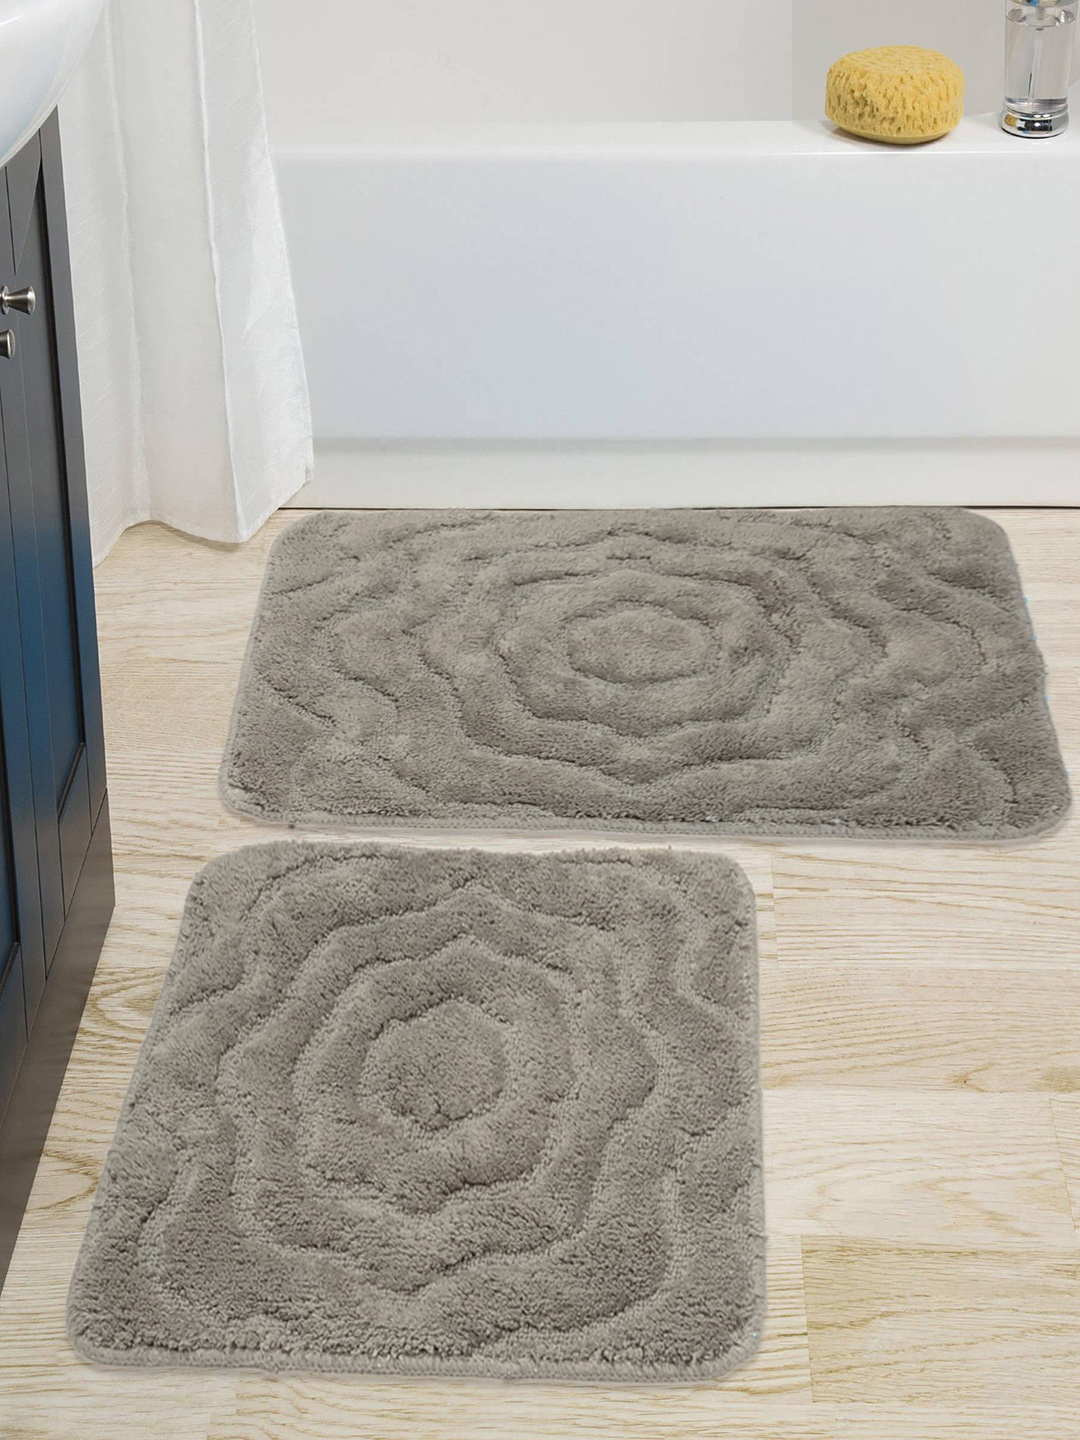 white contour bath rug